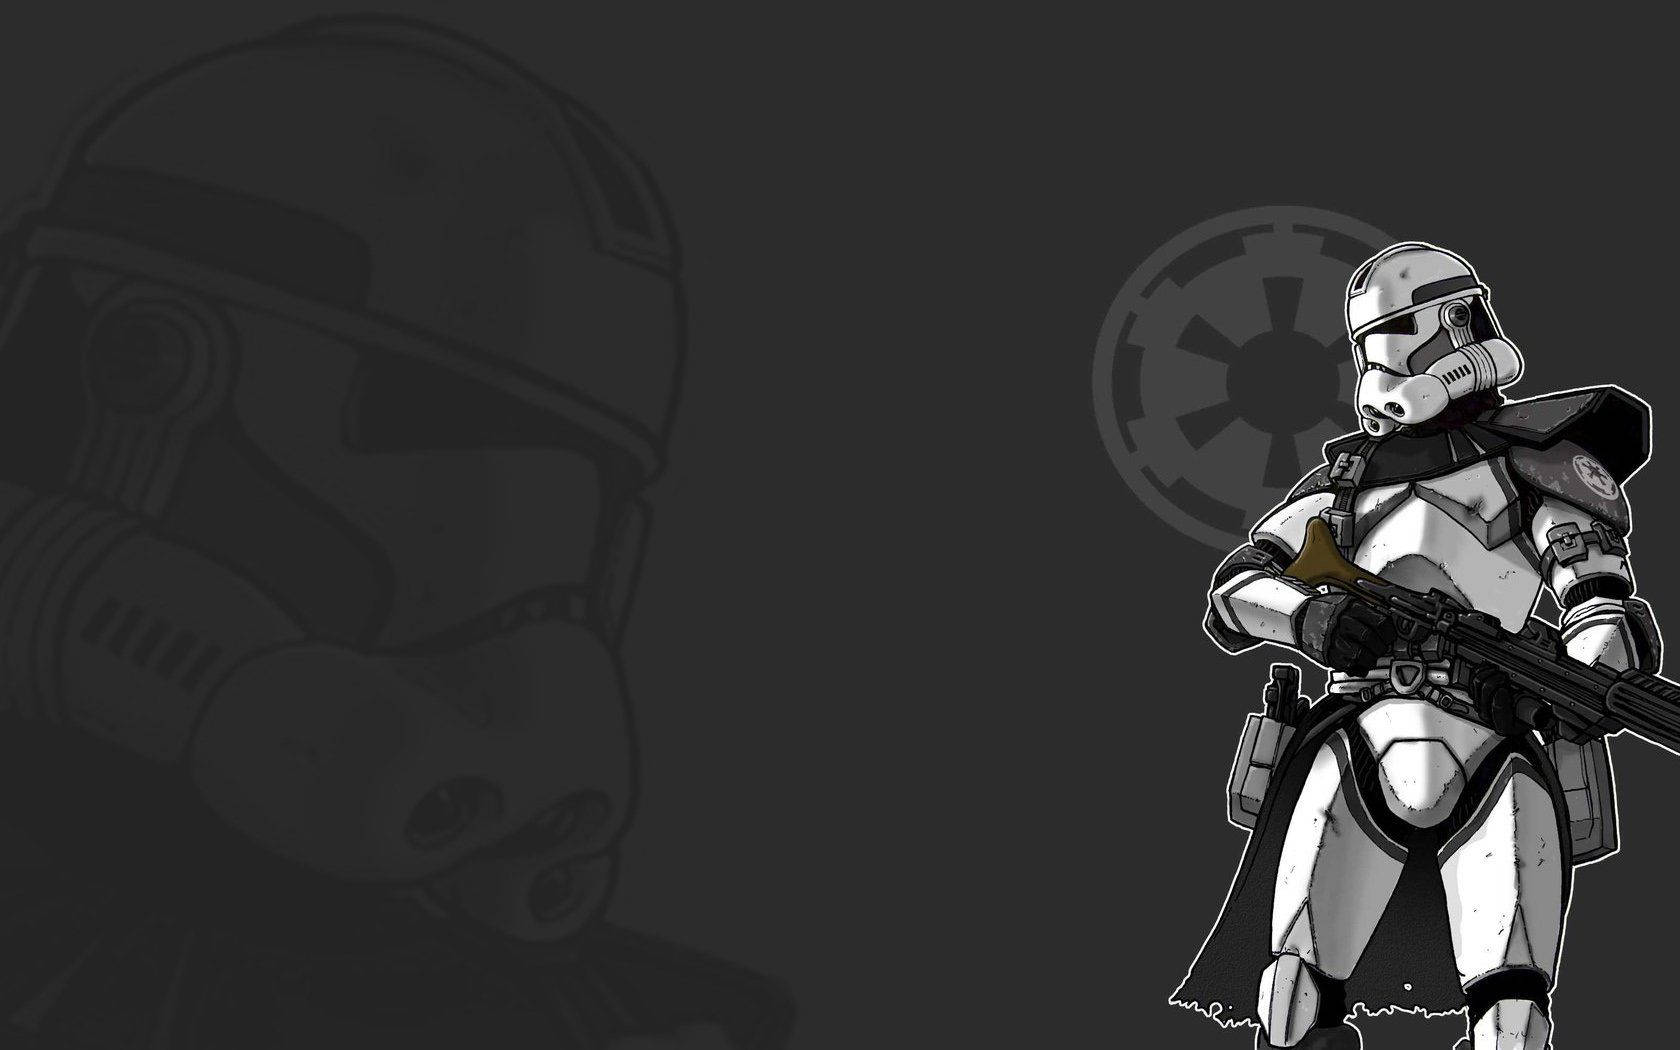 Stormtrooper Watermark Cover Background